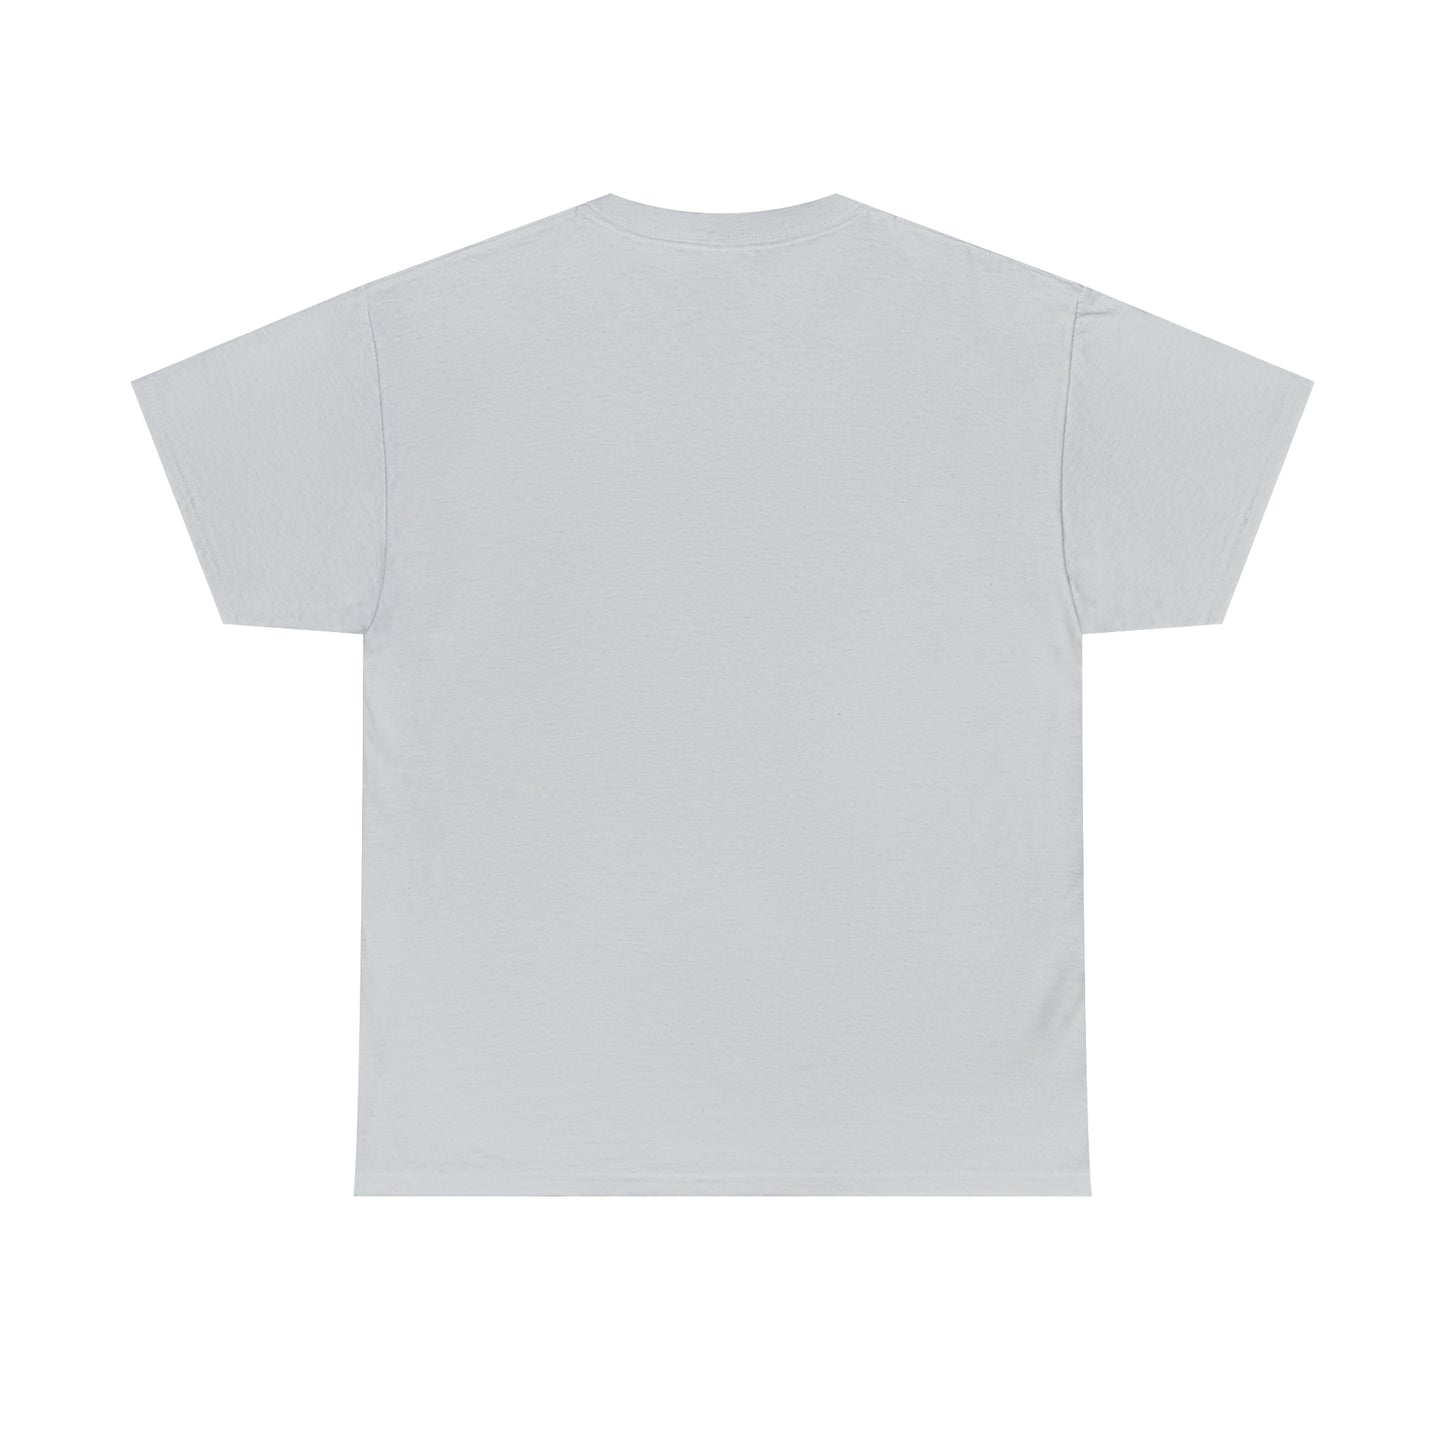 941’s Finest T-shirt (solid color design)